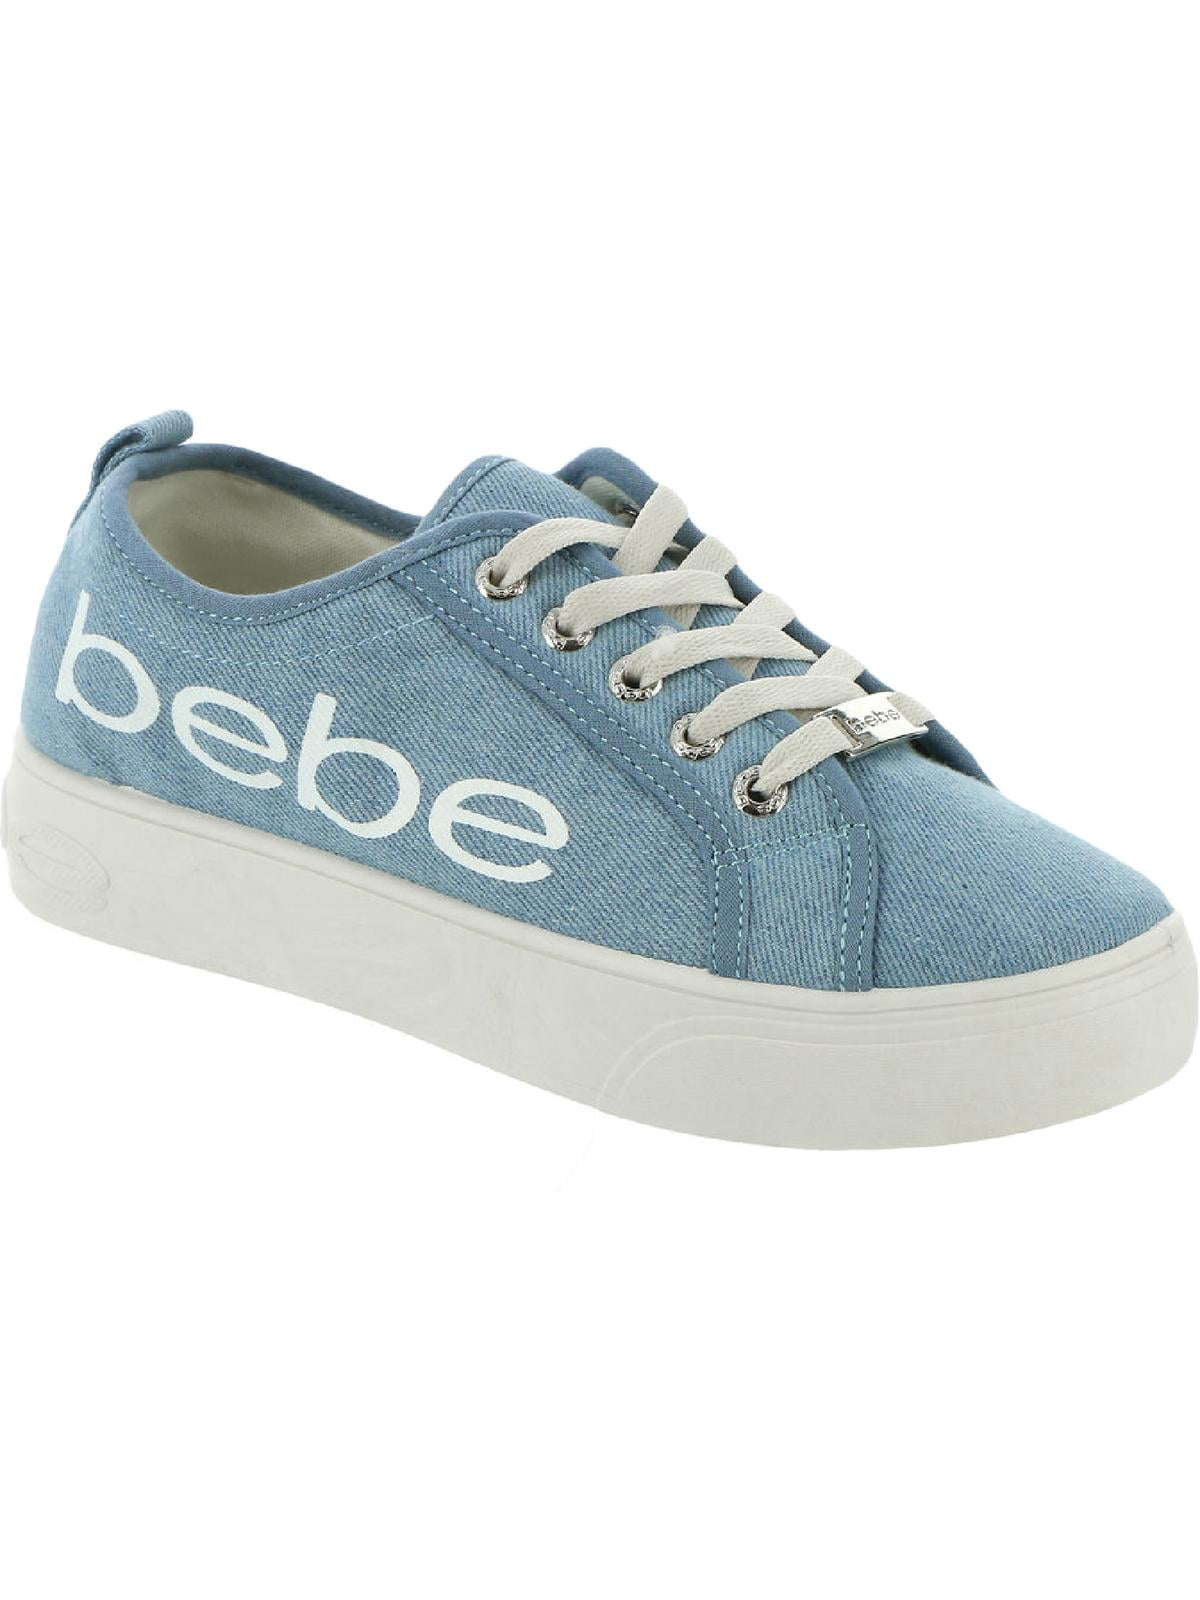 Bebe Destini Sneakers ** FREE SHIPPING **